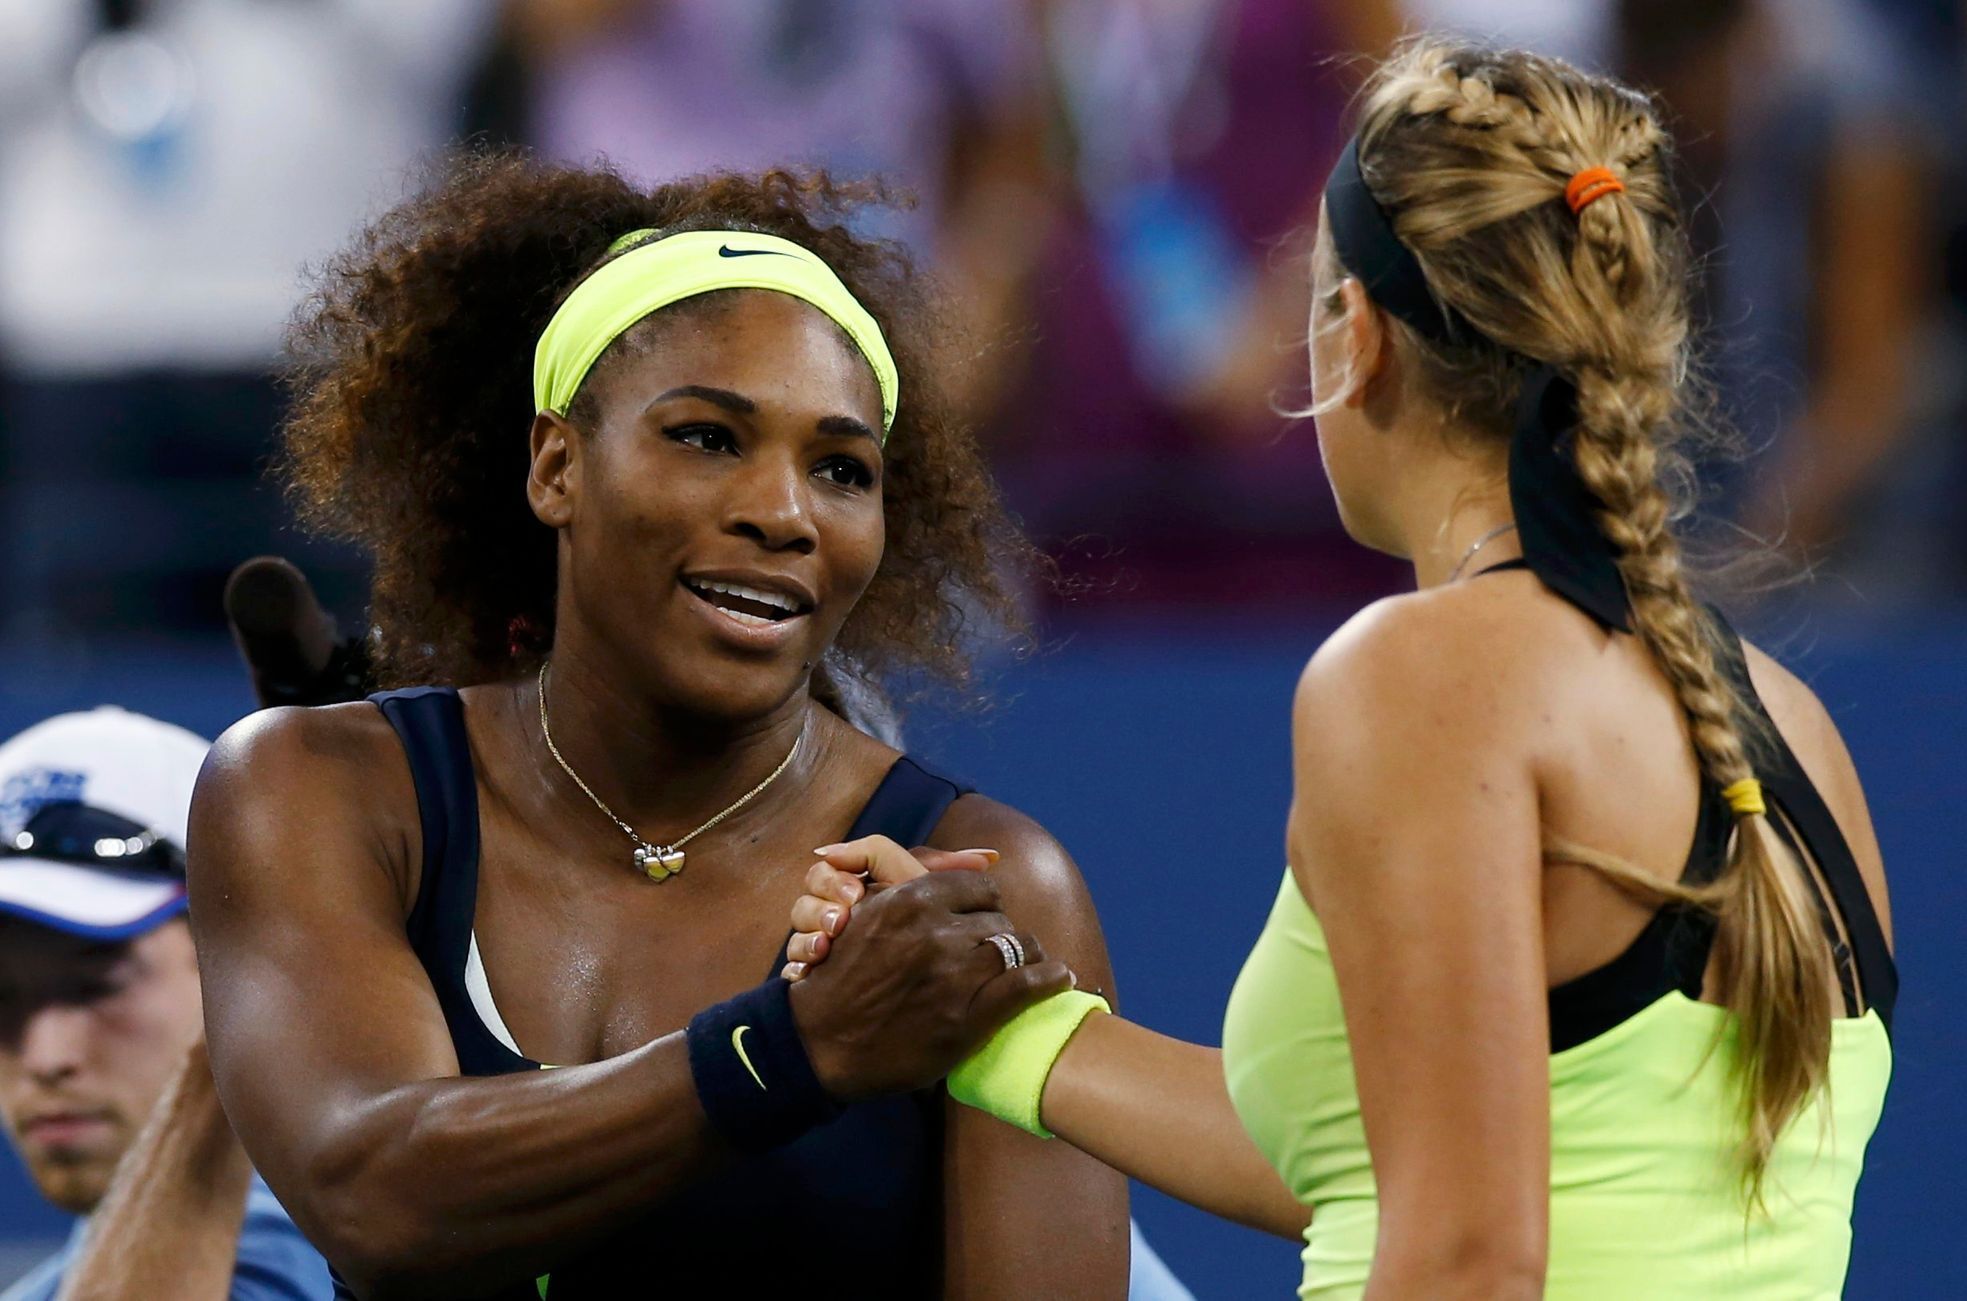 Viktoria Azarenková a Serena Williamsová ve finále US Open 2012